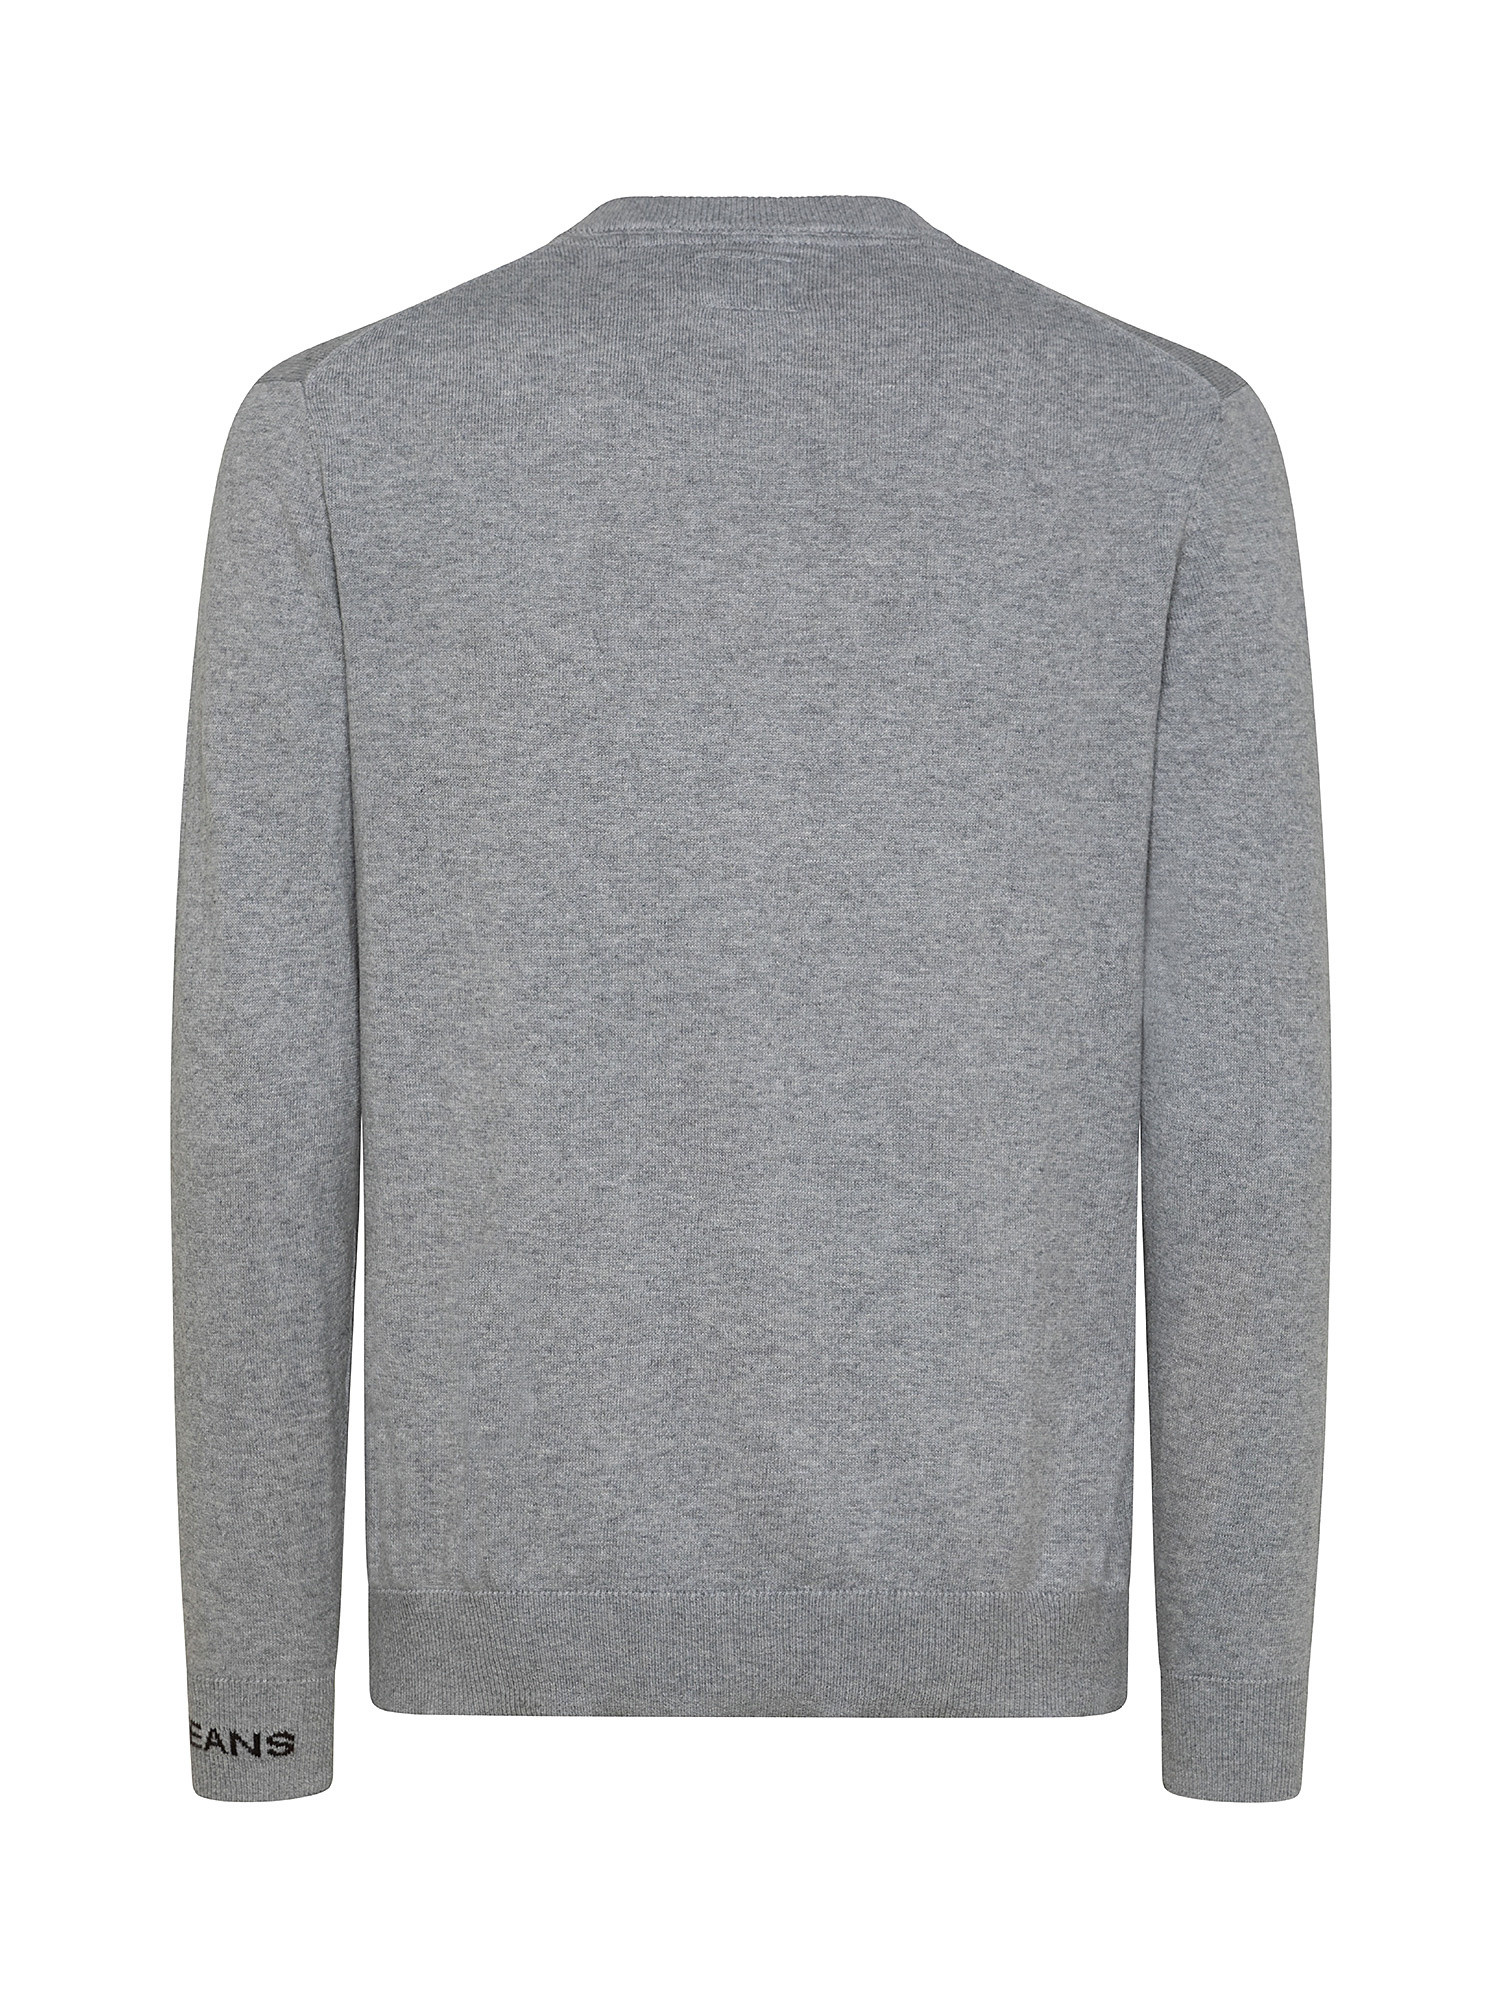 Andre fine knit sweater, Light Grey, large image number 1